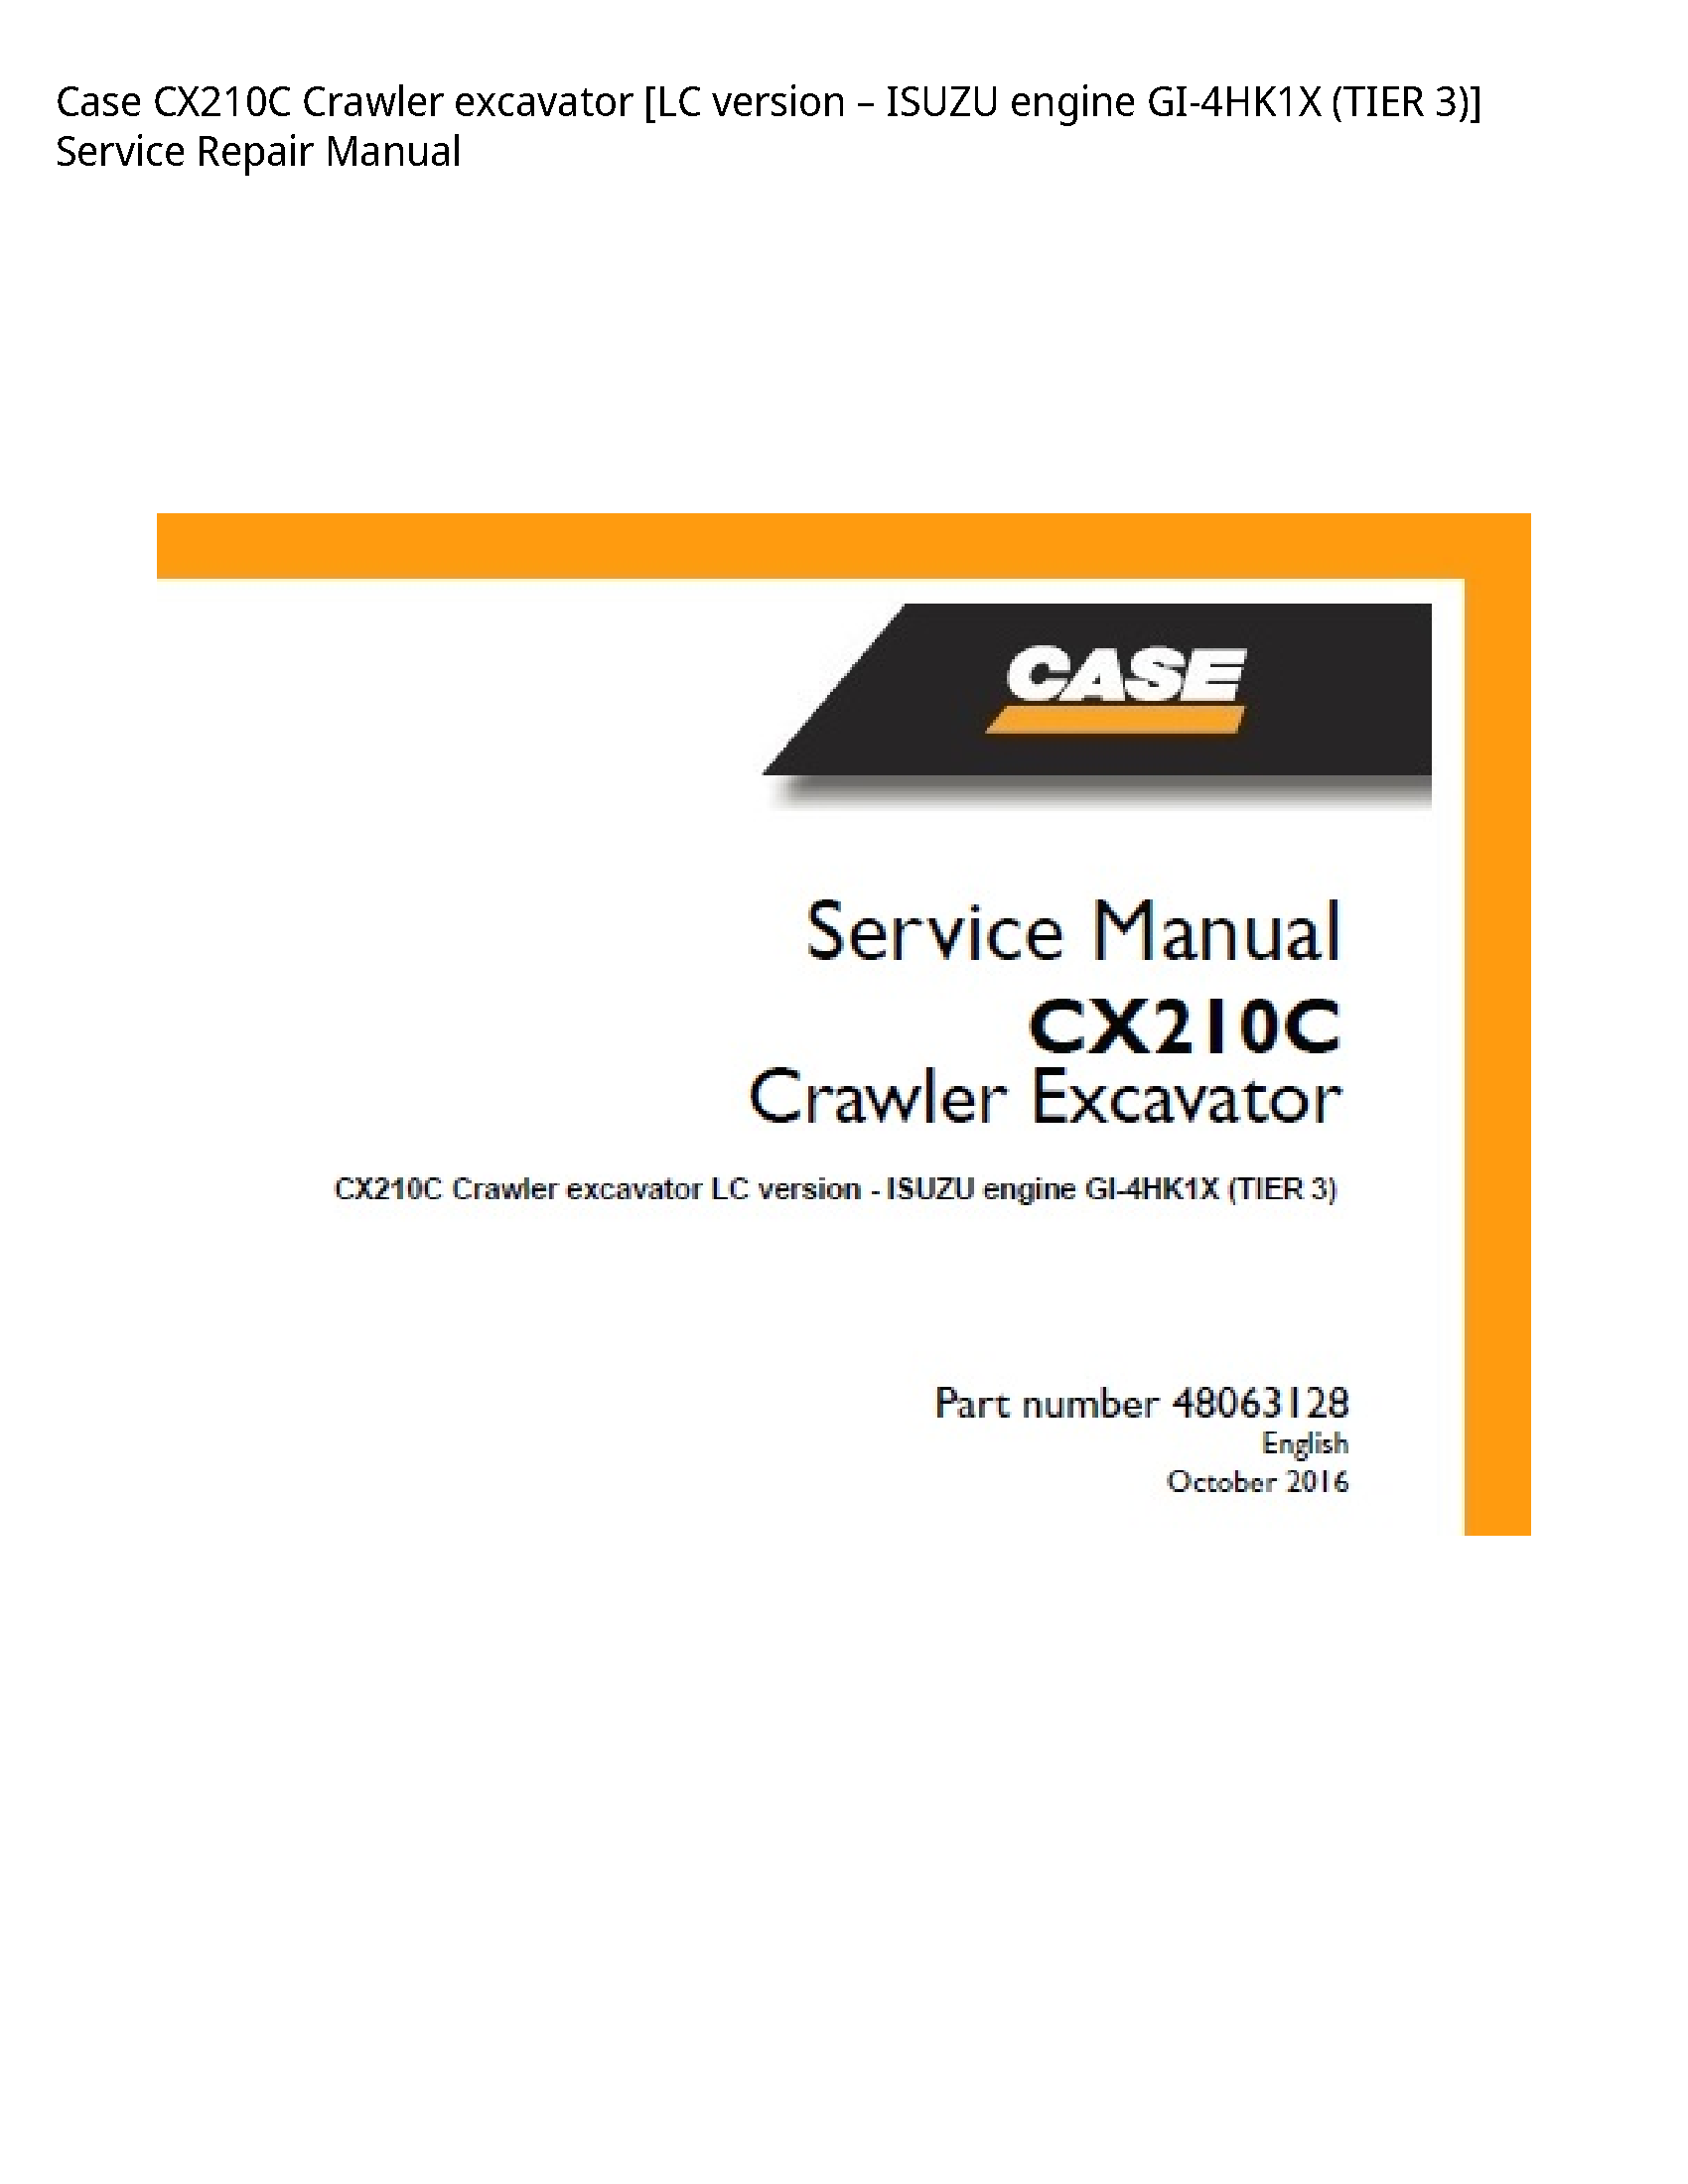 Case/Case IH CX210C Crawler excavator [LC version ISUZU engine (TIER manual